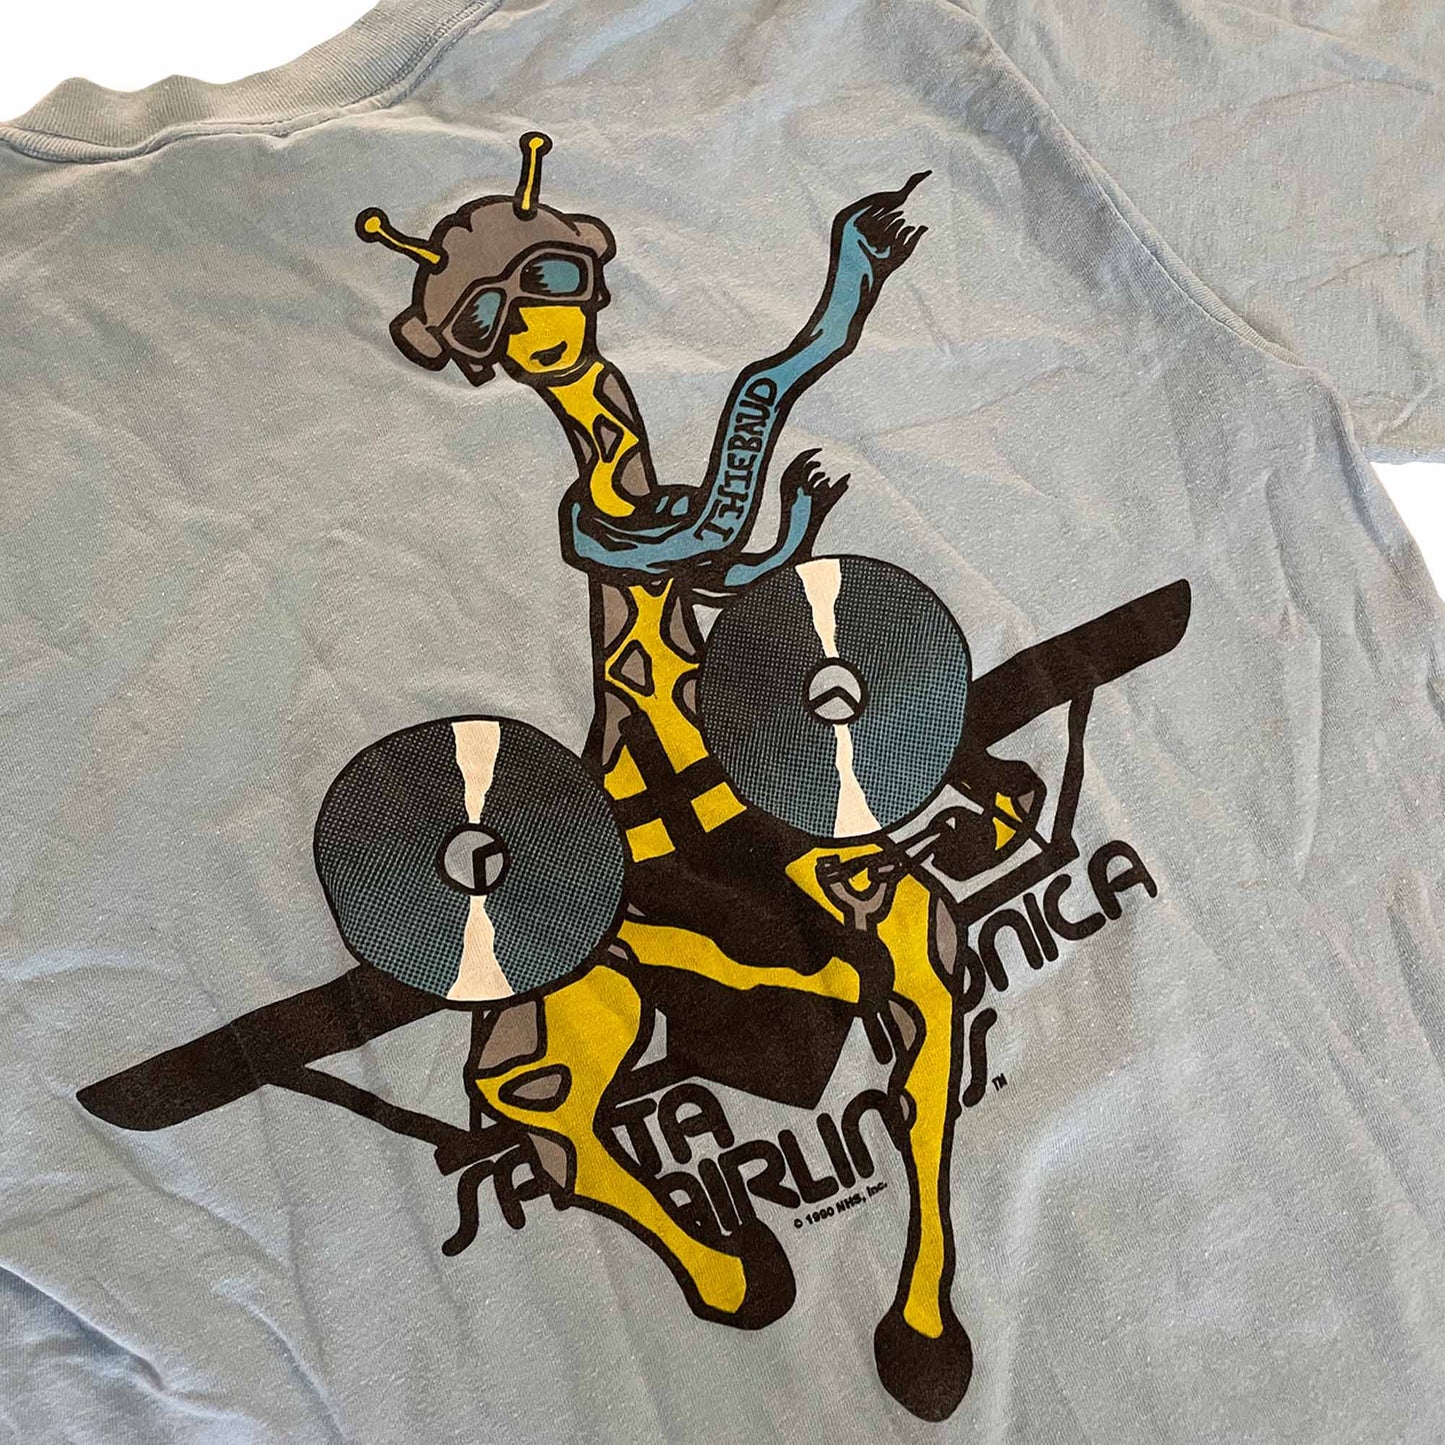 Santa Cruz ‘Santa Monica Airlines’ Jim Thiebaud Giraffe T-Shirt (Sky Blue) VINTAGE 90s